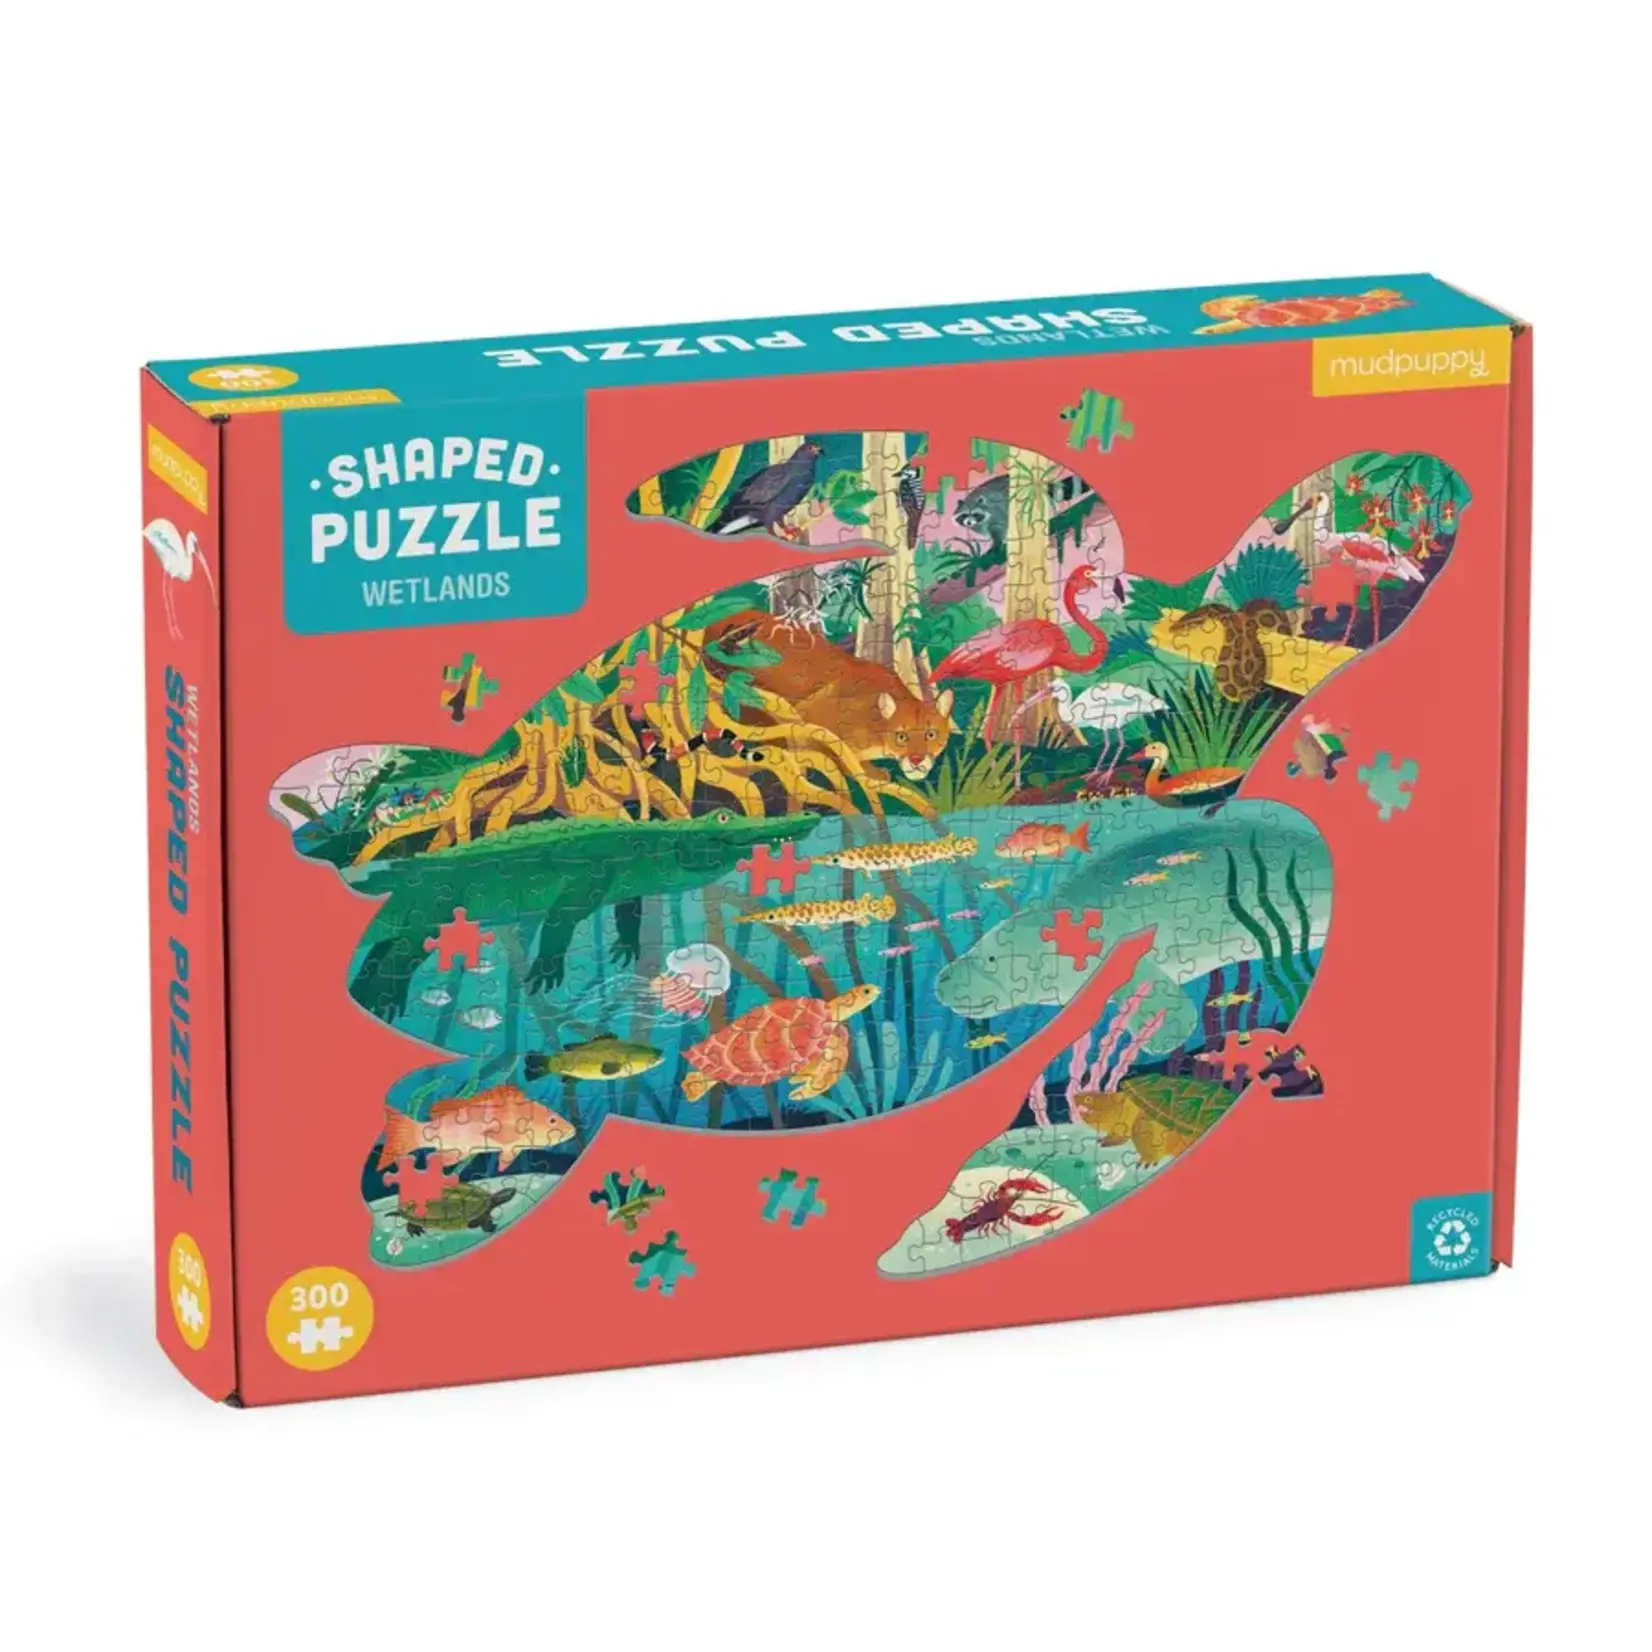 Mudpuppy Wetlands, 300-Piece Jigsaw Puzzle (Shaped)